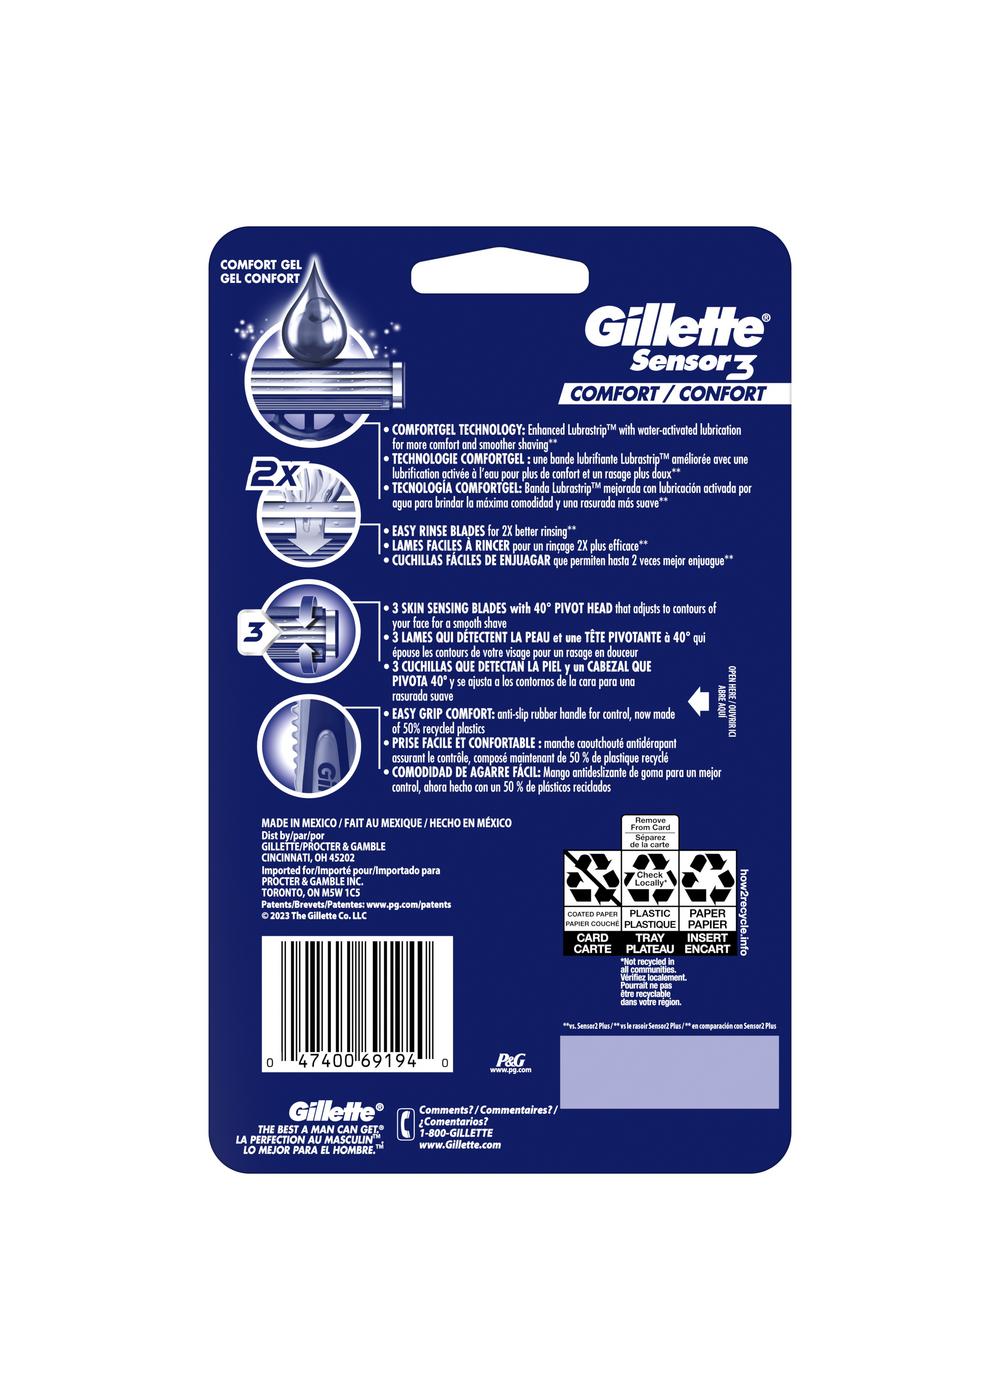 Gillette Sensor 3 Comfort Disposable Razors; image 2 of 2